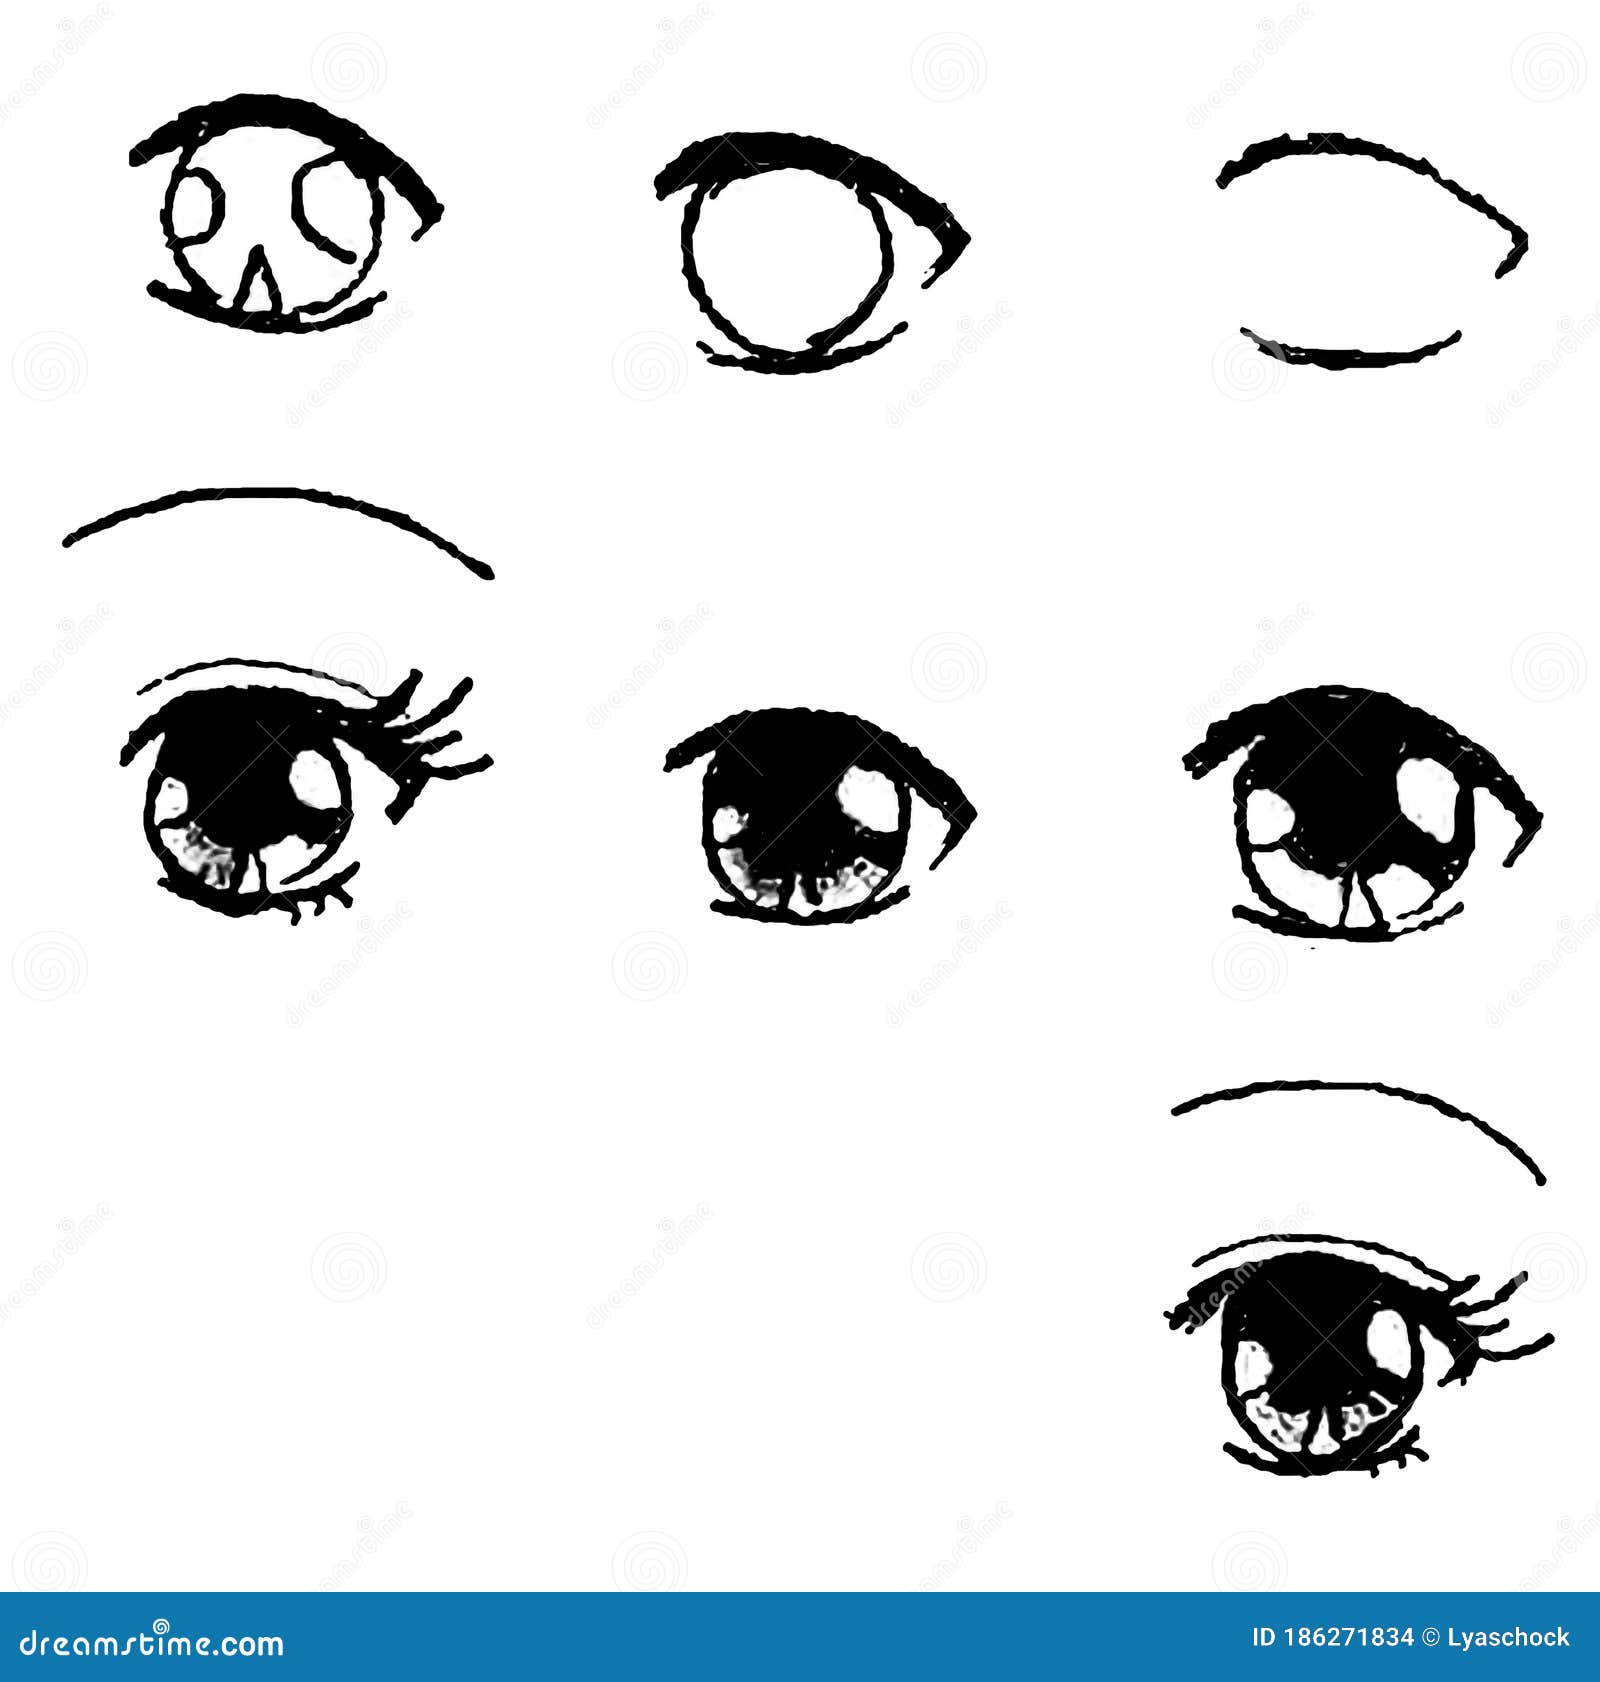 Tutorial of Drawing Human Eye. Eye in Anime Style. Female